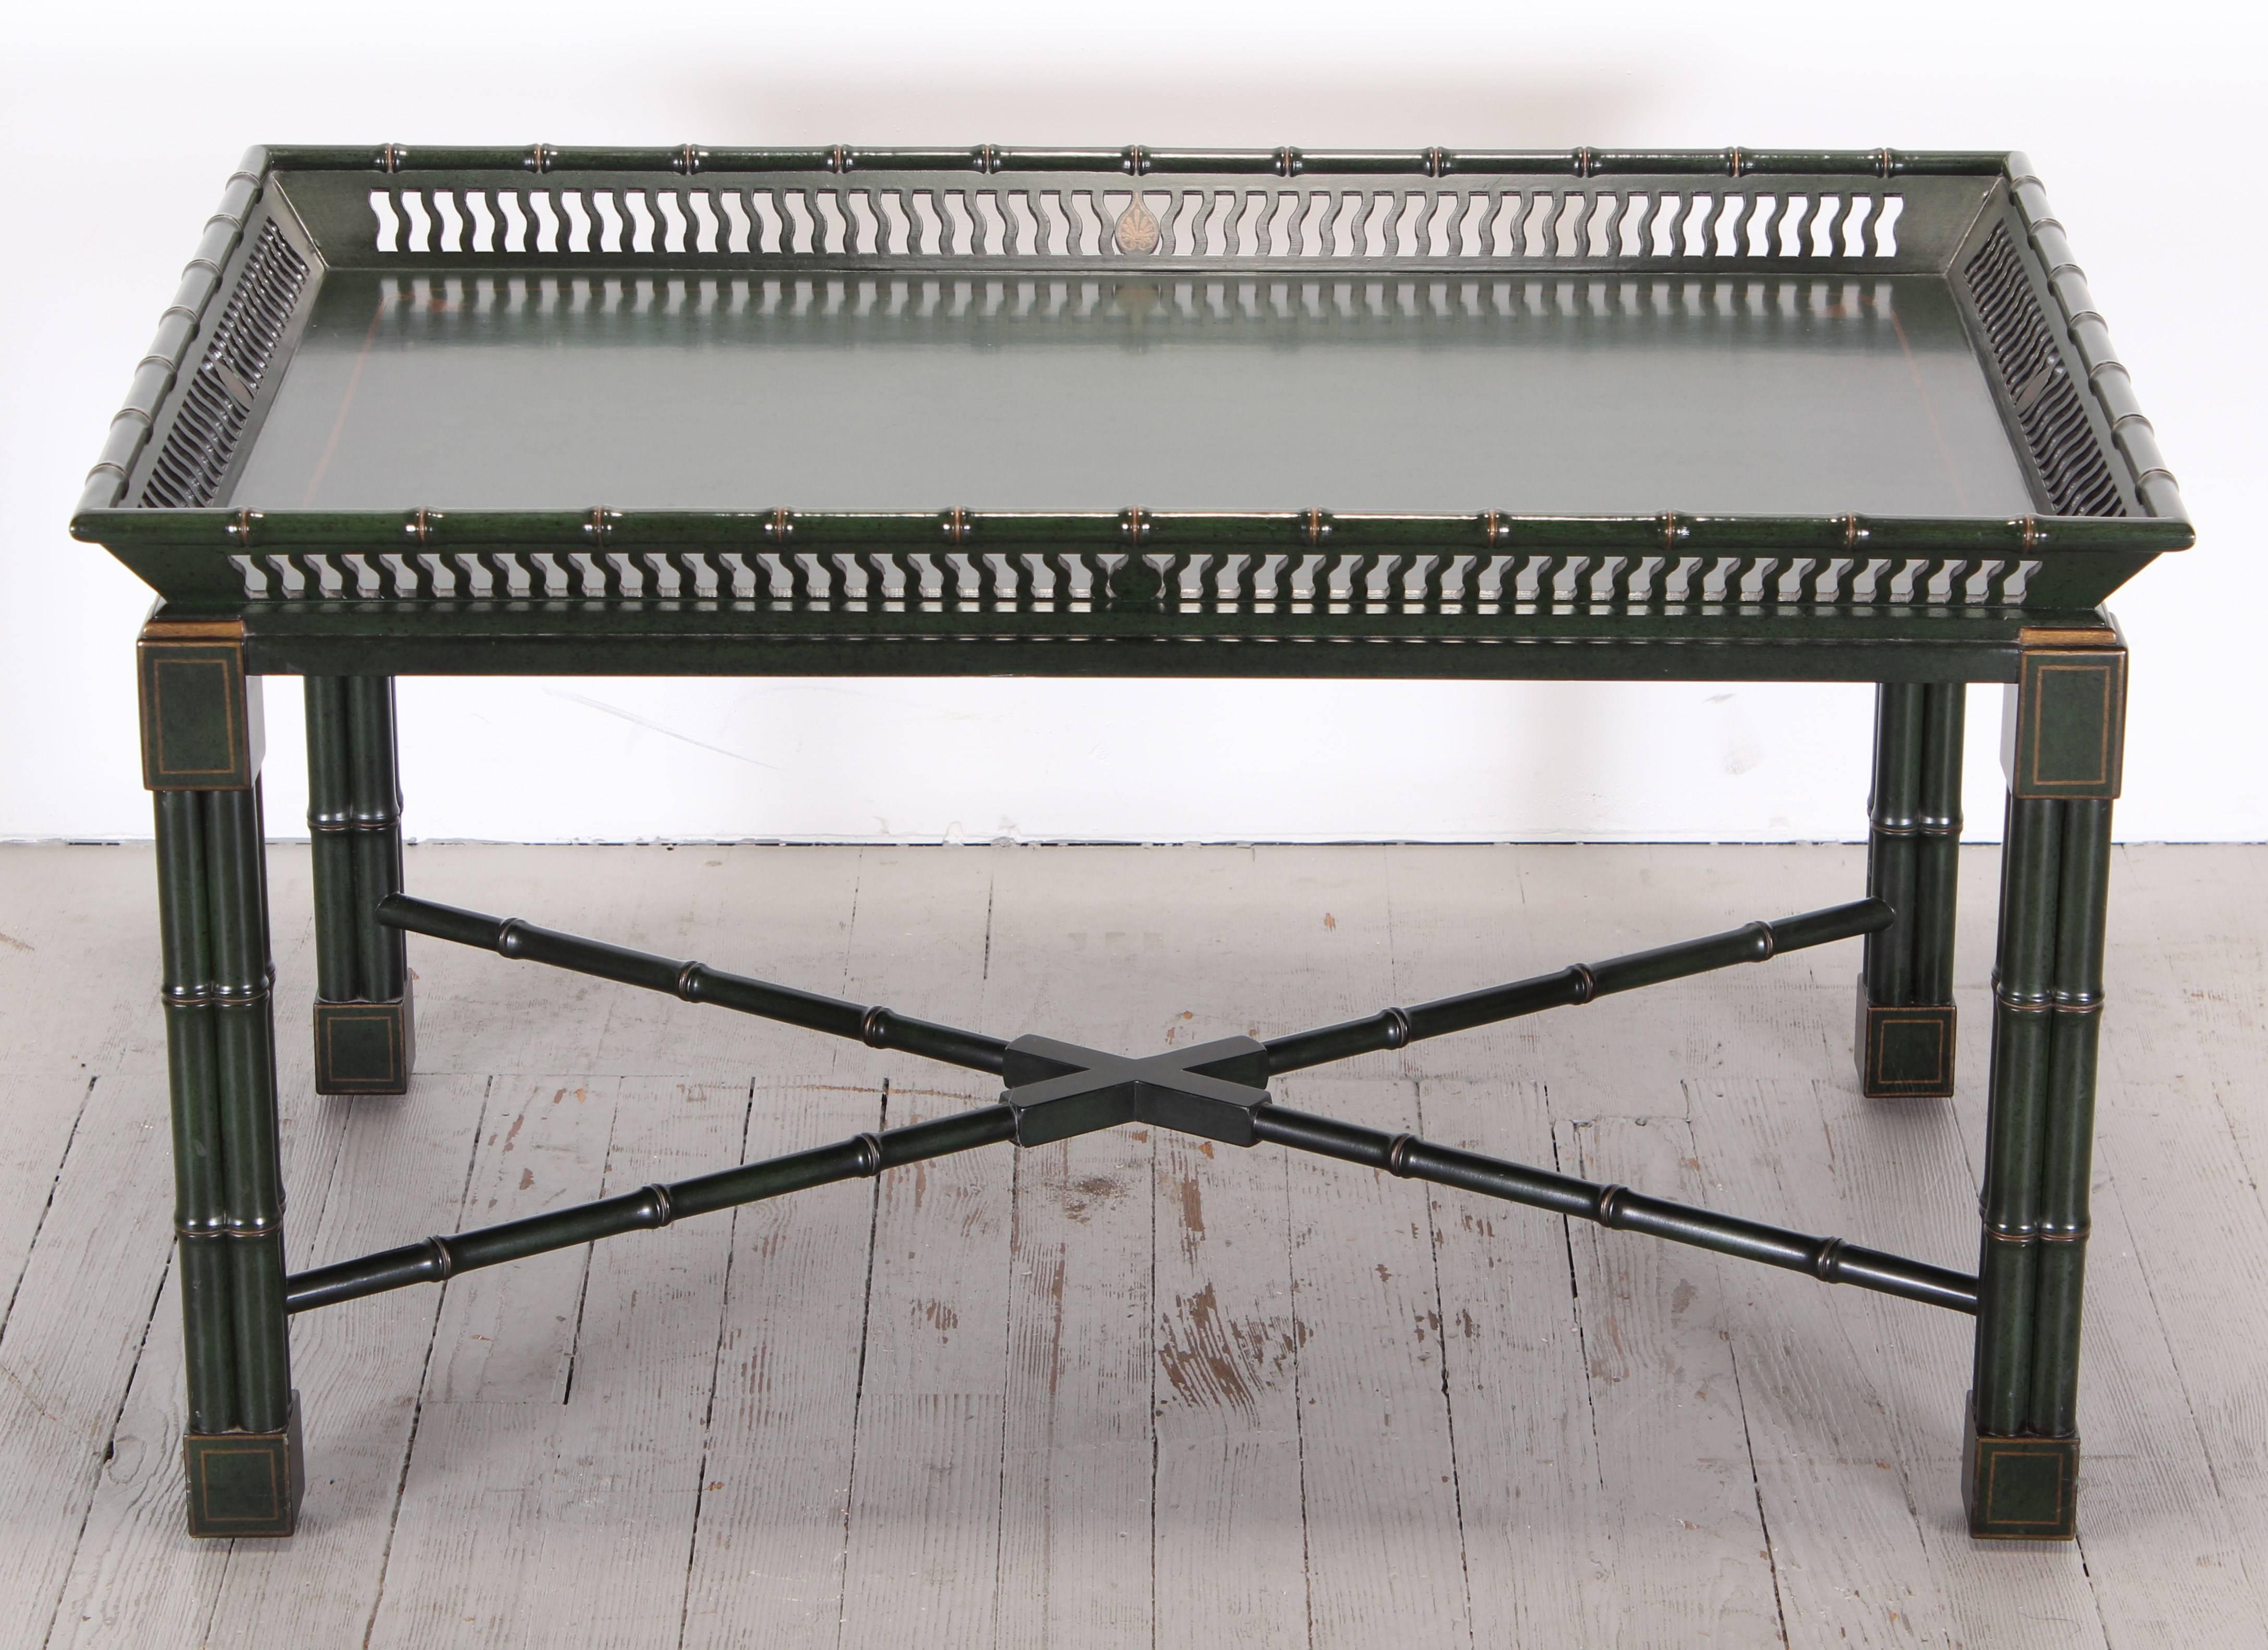 Mario Buatta collection tray table for John Widdicomb Company, 1970. Hunter green, bamboo designed leg, with gold accent trim.